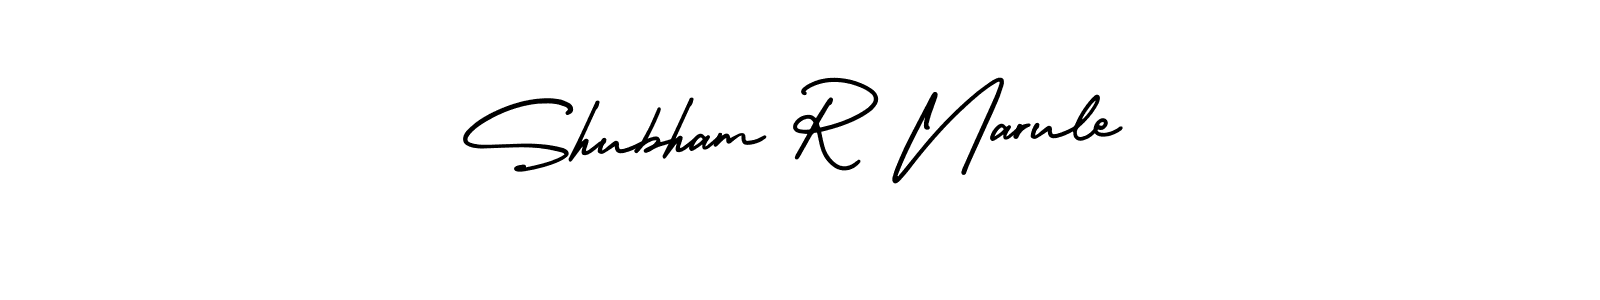 How to Draw Shubham R Narule signature style? AmerikaSignatureDemo-Regular is a latest design signature styles for name Shubham R Narule. Shubham R Narule signature style 3 images and pictures png